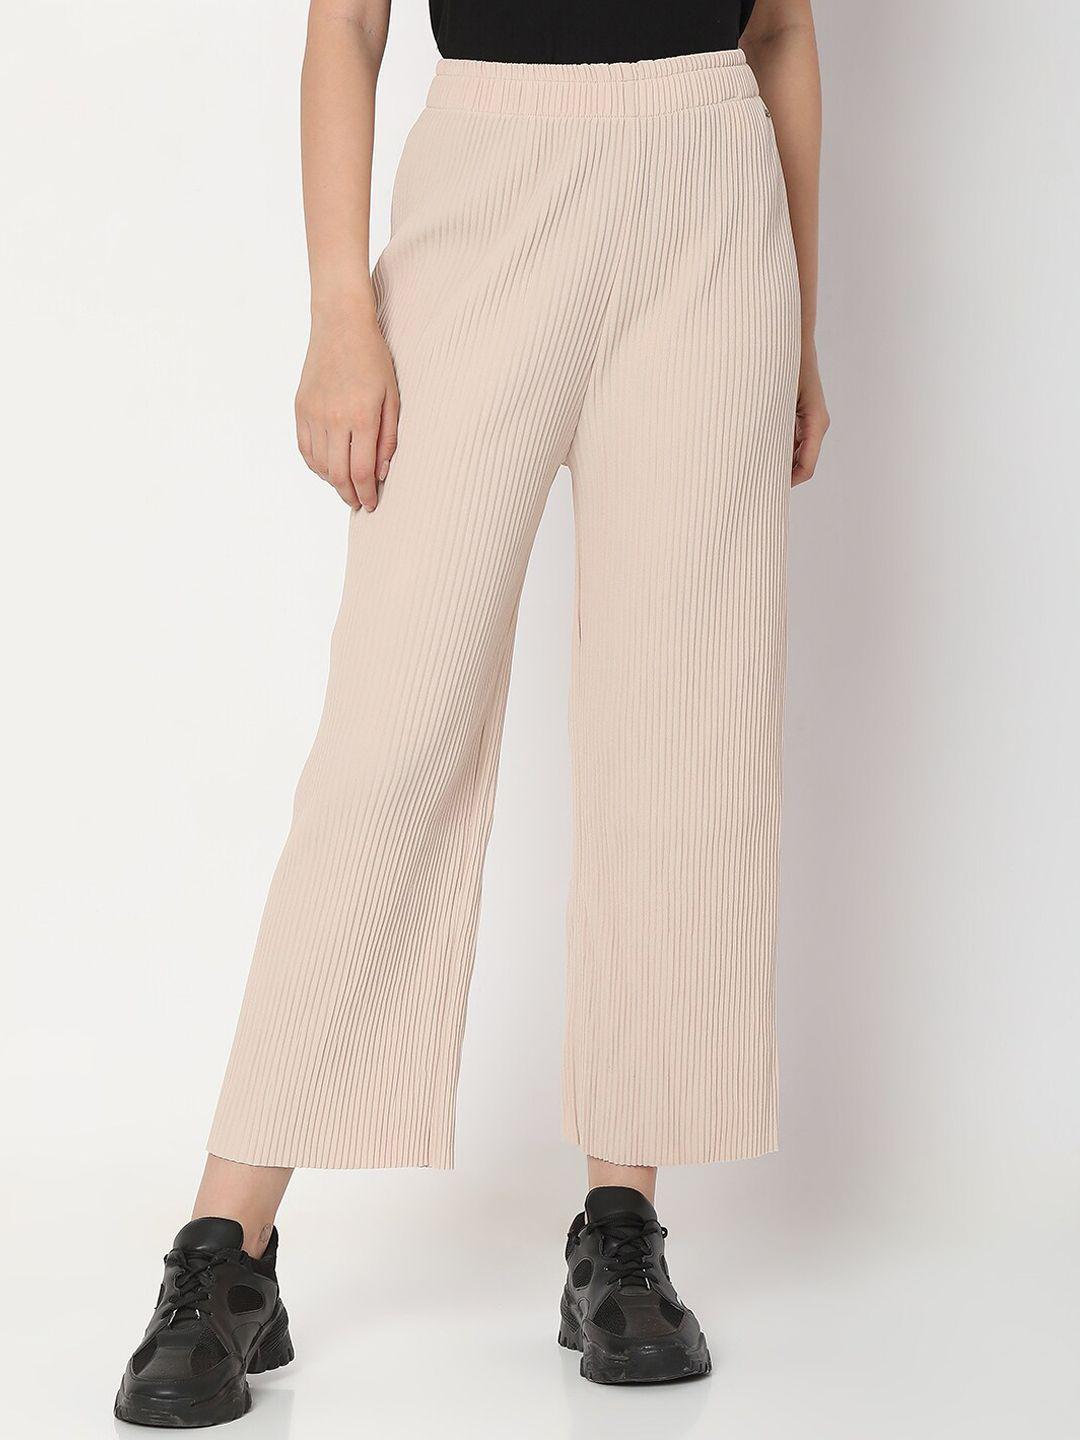 spykar women cream-colored solid cotton track pants